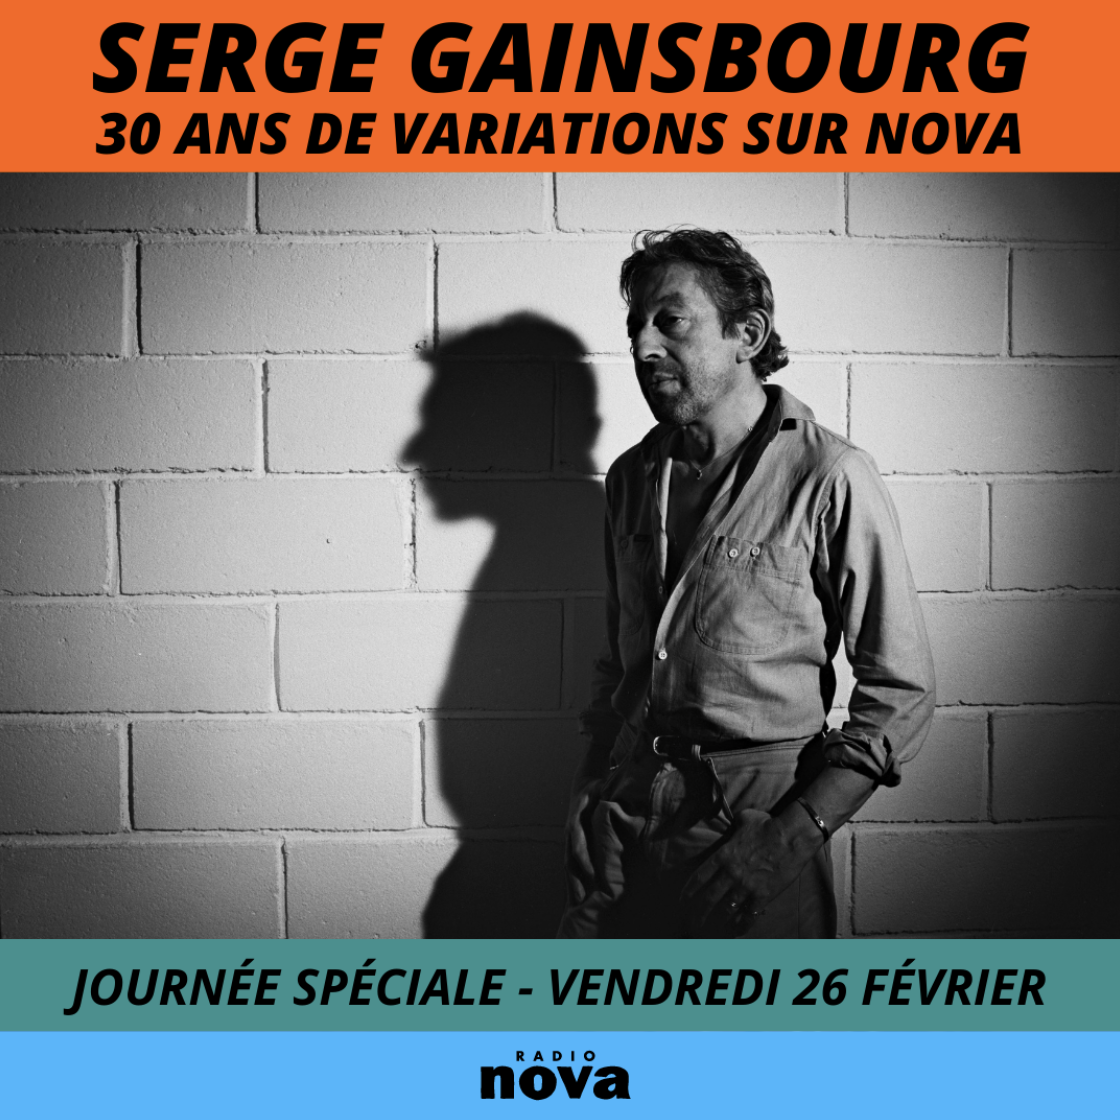 Radio Nova rend hommage à Gainsbourg